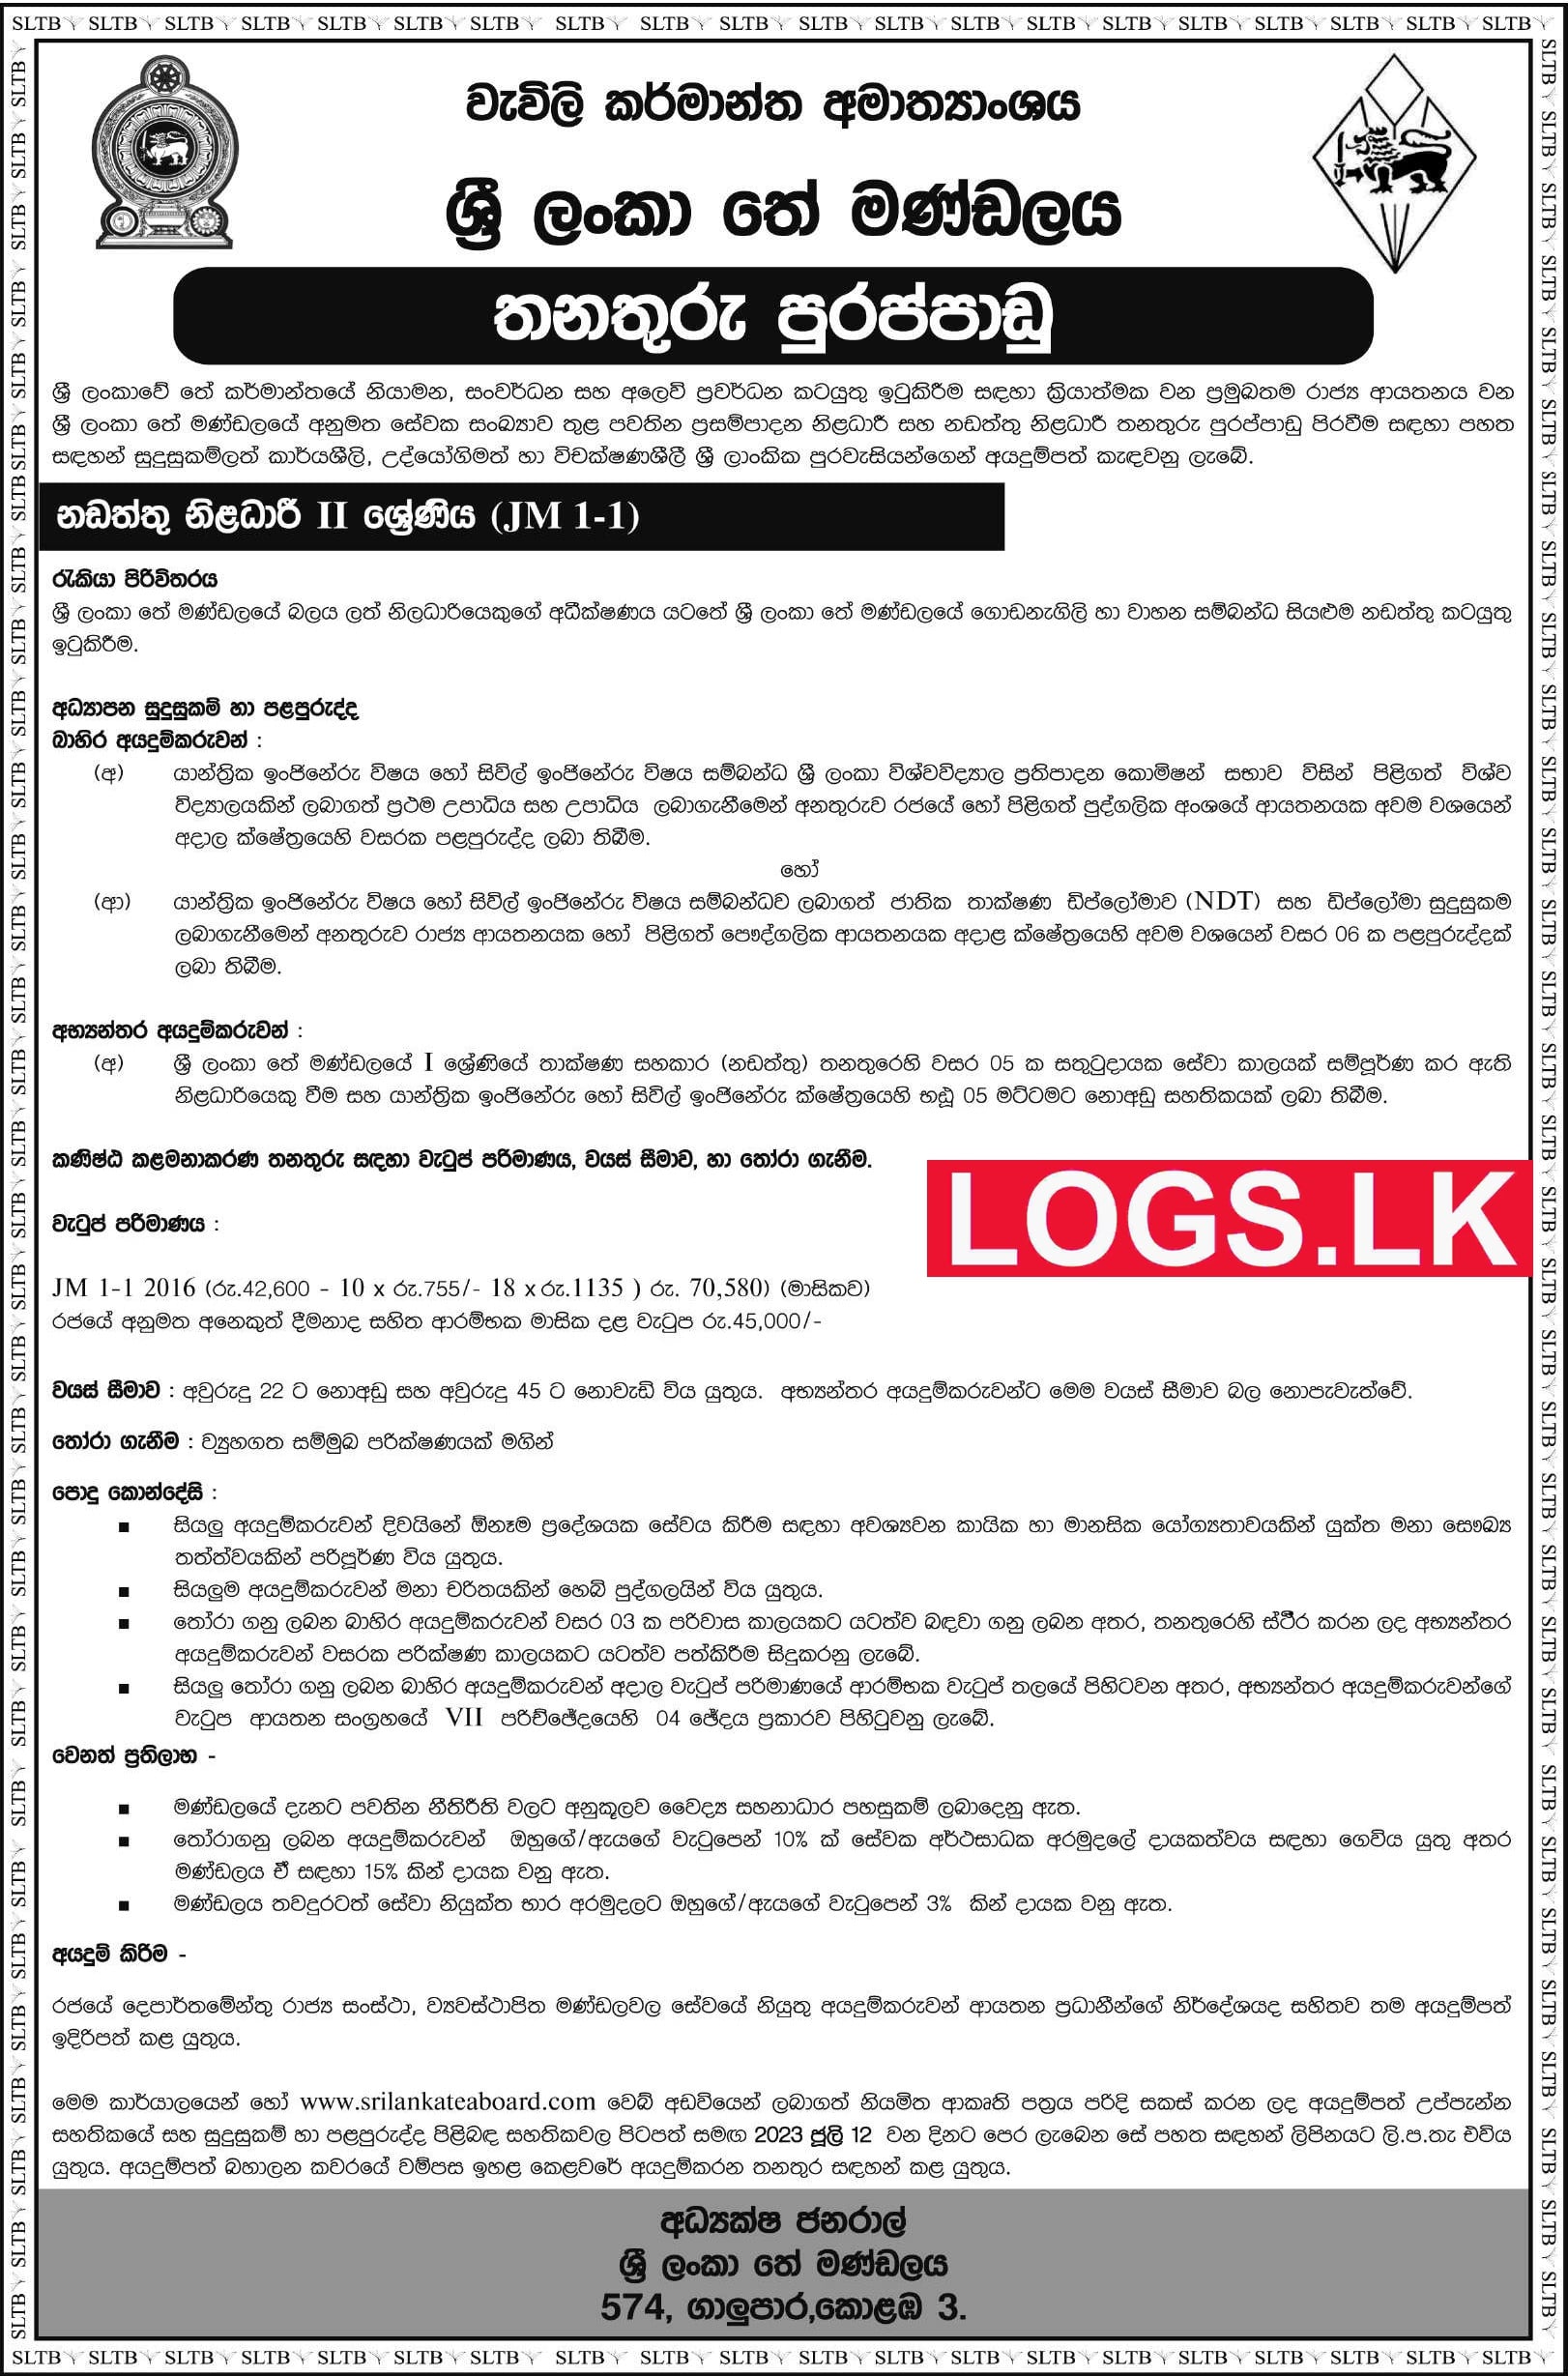 Maintenance Officer - Sri Lanka Tea Board Job Vacancies 2023 Application Form, Details Download